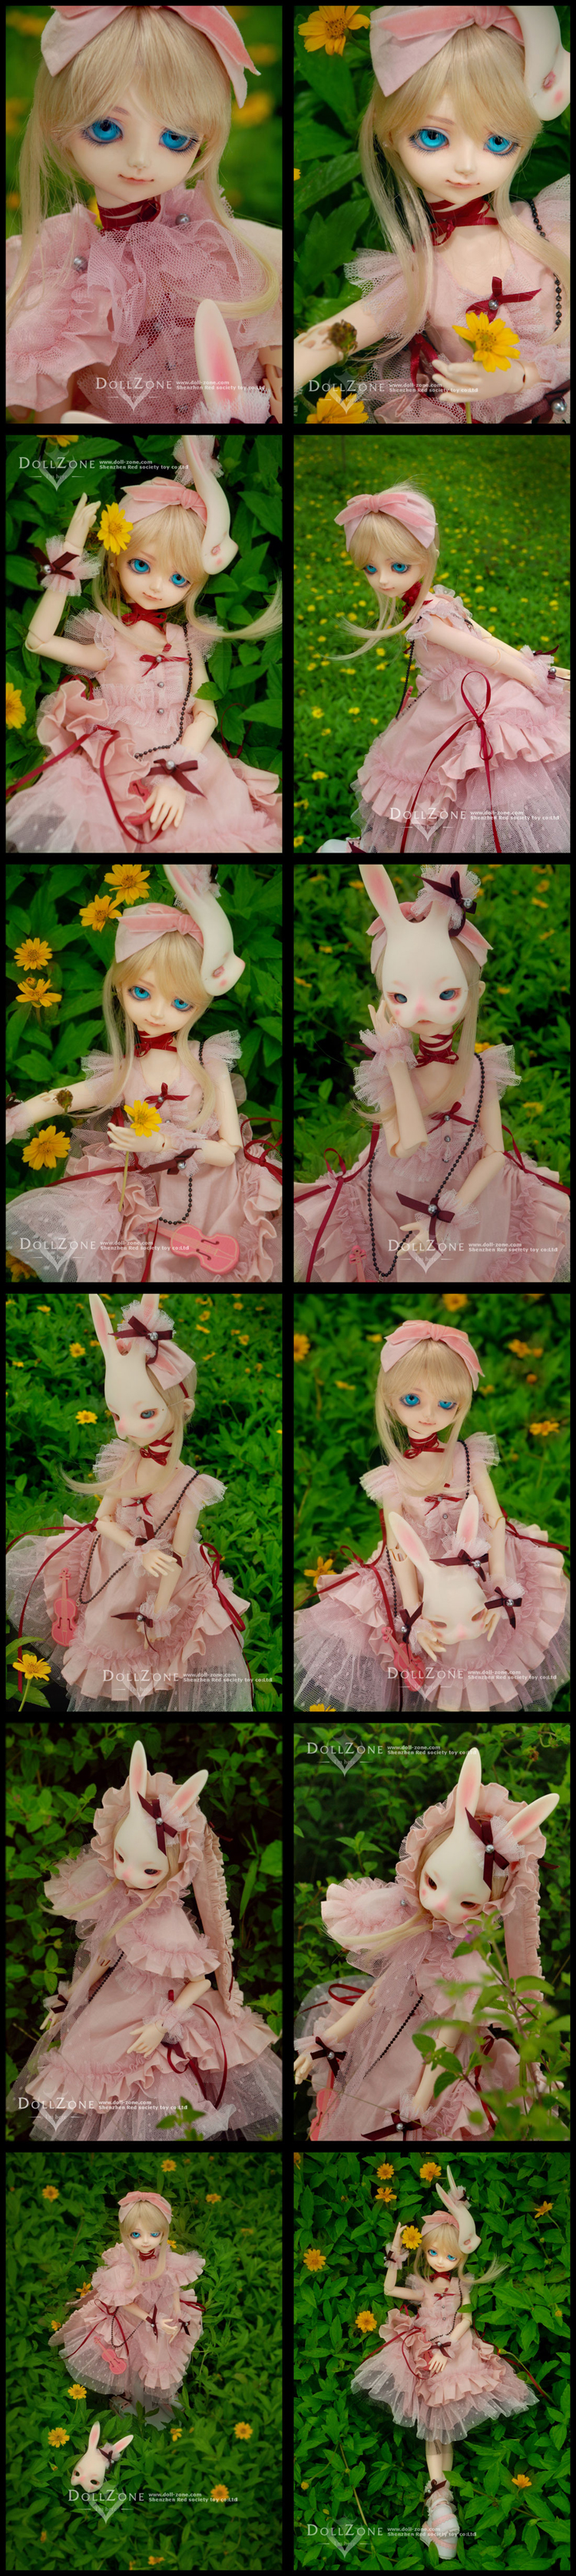 BJD Demi-2 girl 44cm Boll-jointed doll